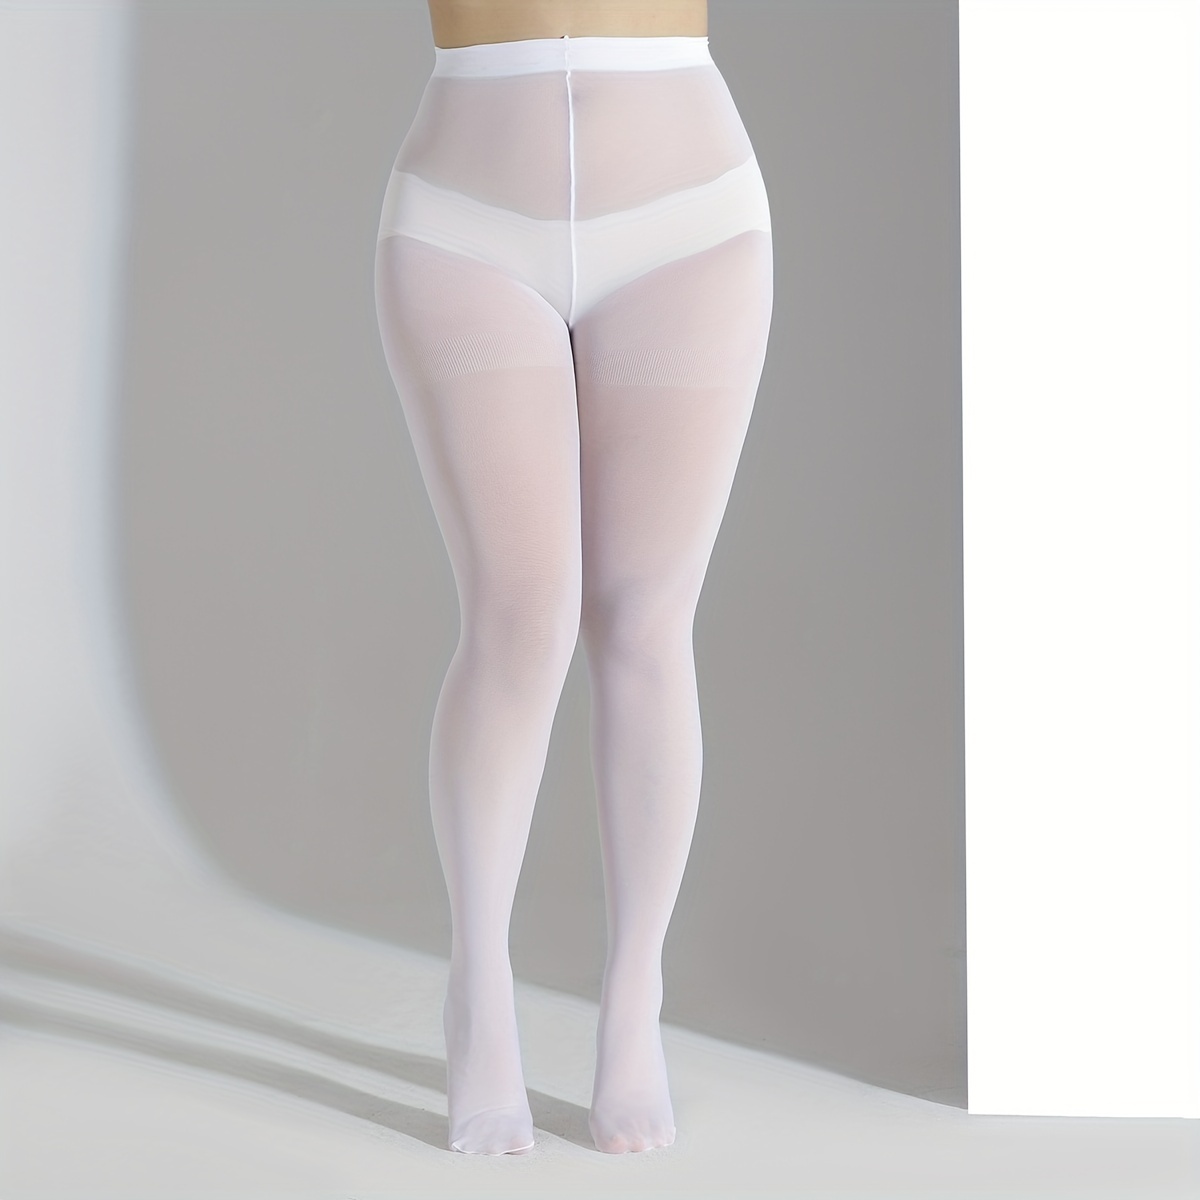 Women Plus Size 3X 4X 5X 600D velvet opaque Stockings Pantyhose